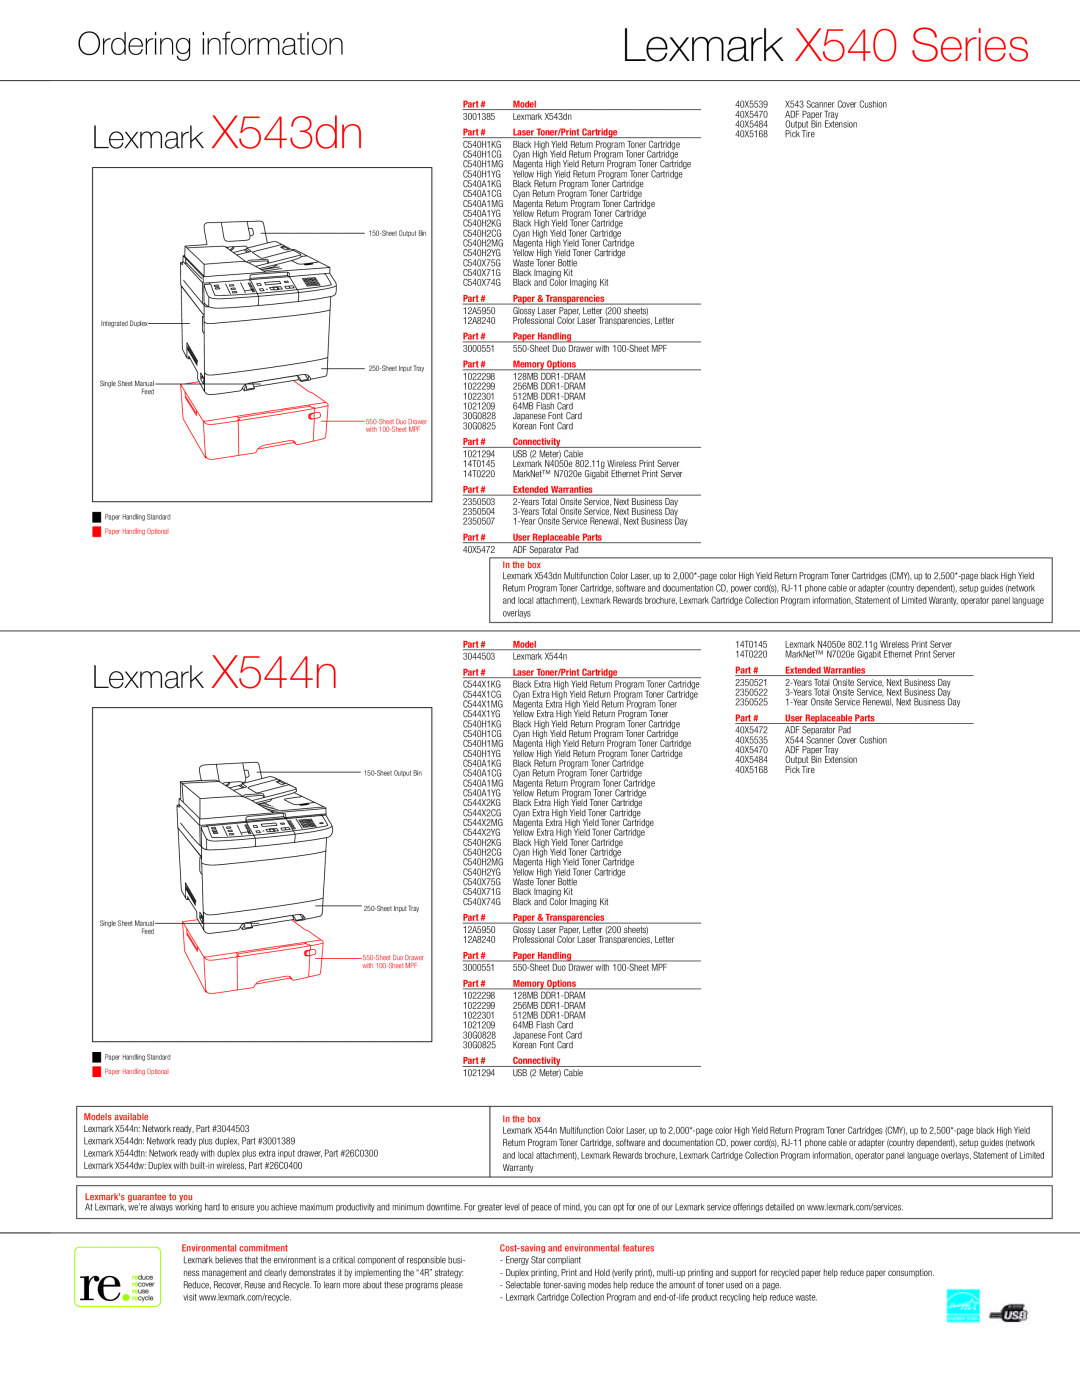 Lexmark manual Ordering information, Lexmark X543dn, Lexmark X544n, Lexmark X540 Series, In the box, Models available 